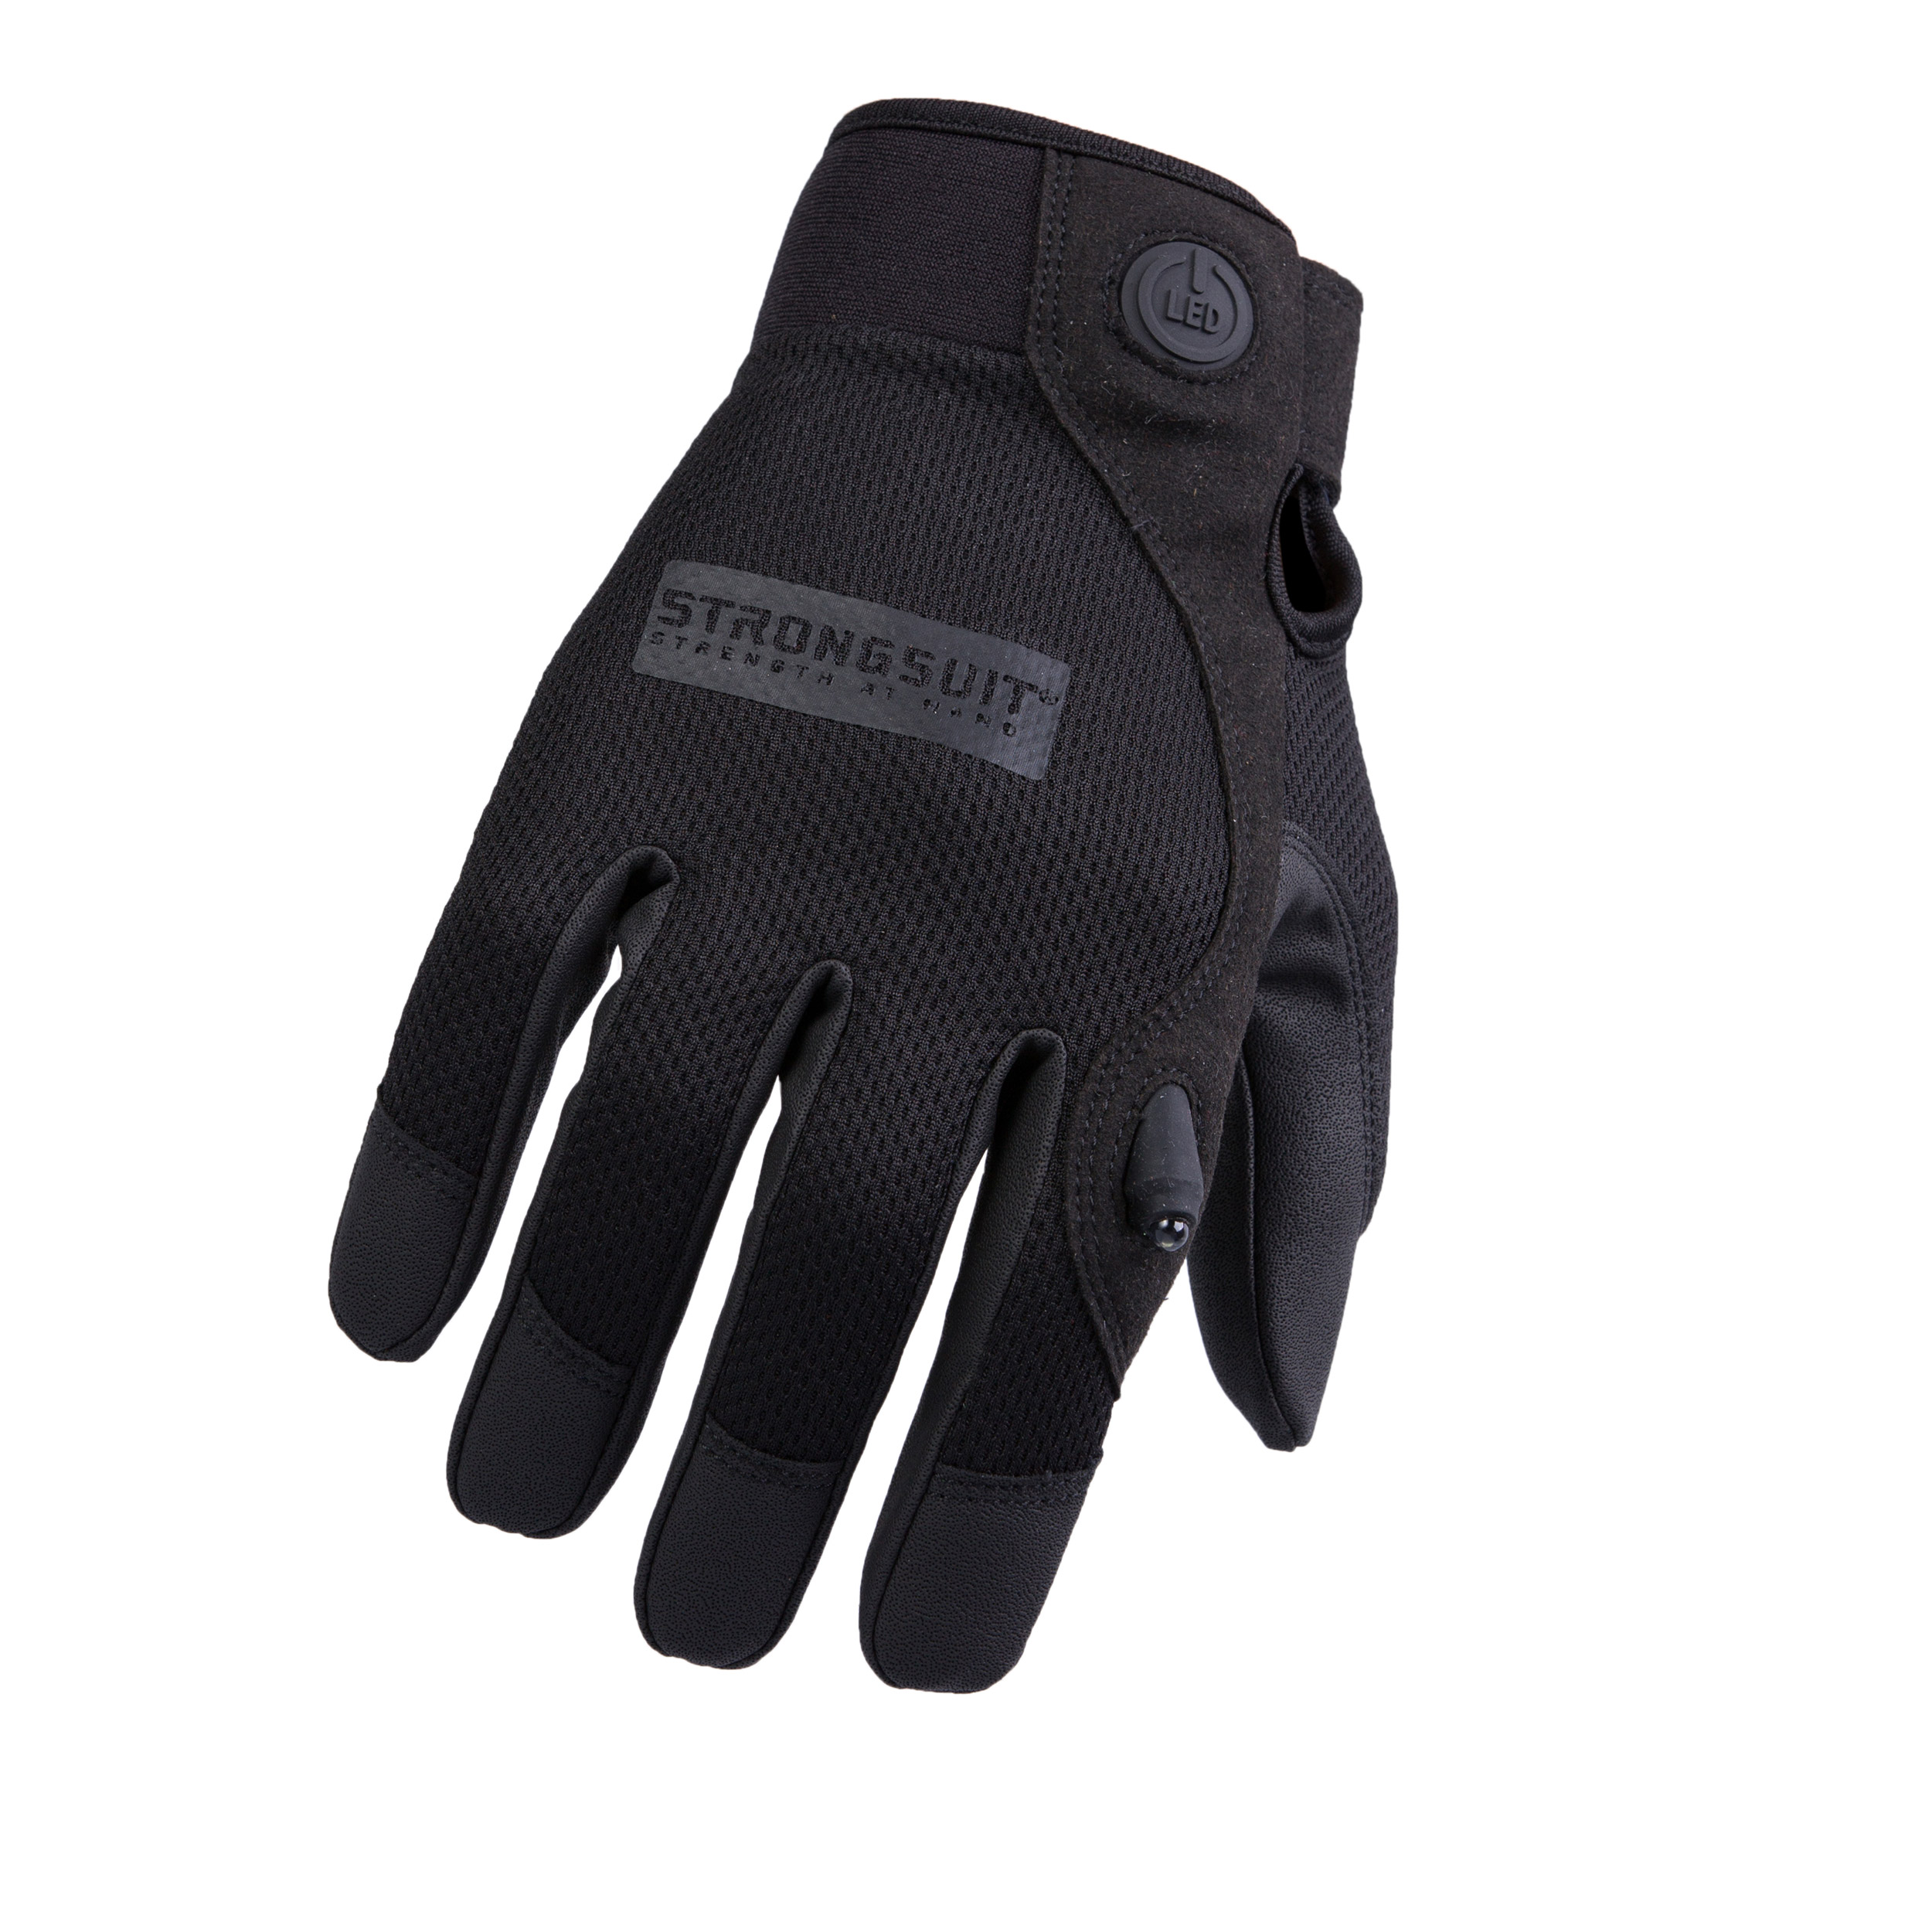 Second Skin Gloves Led Black Medium